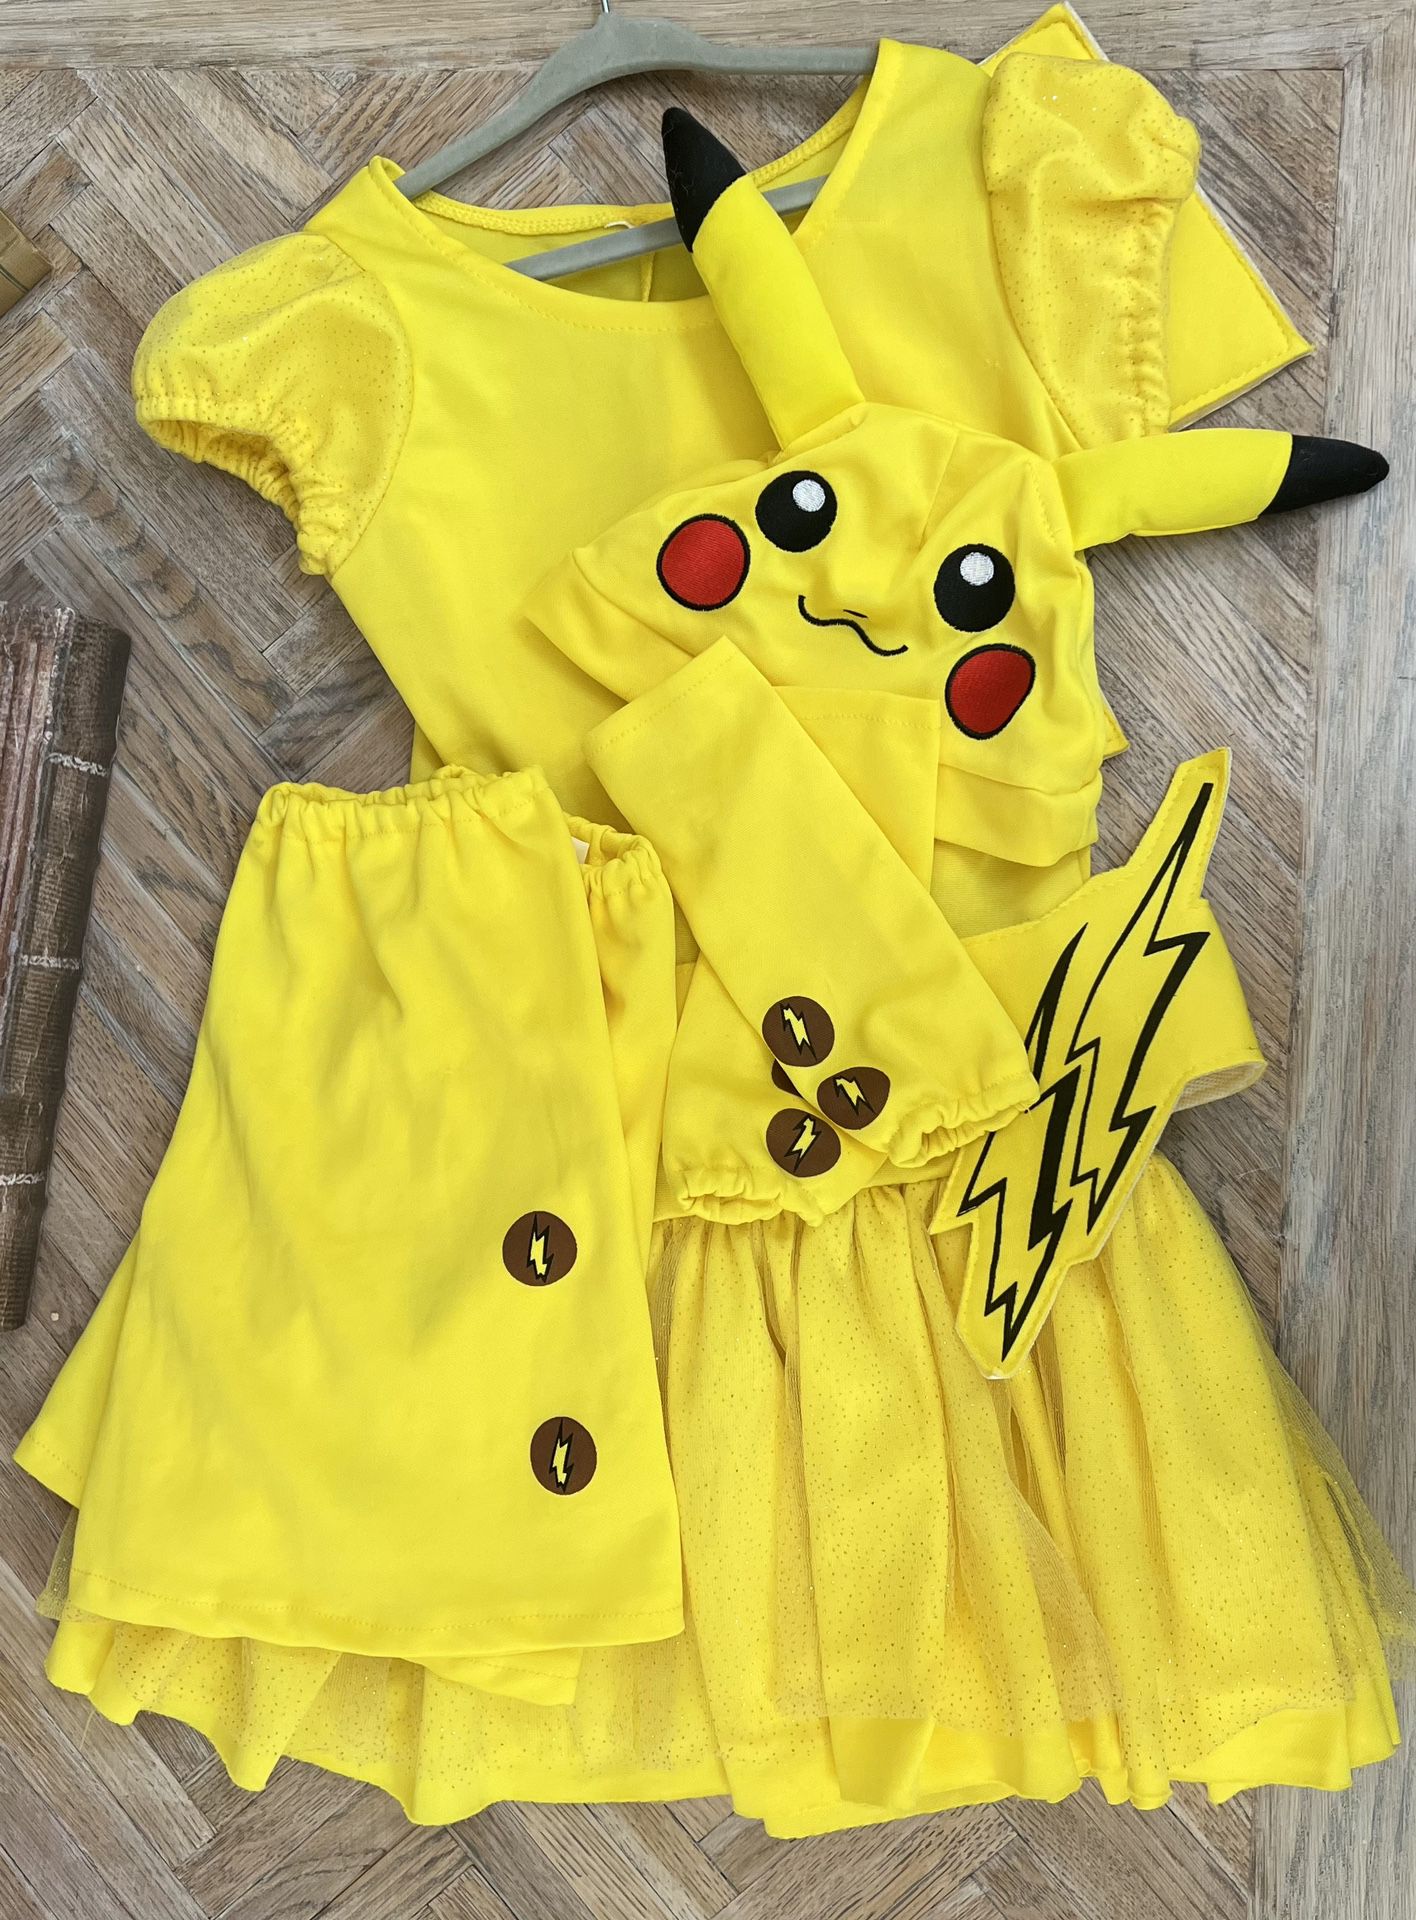 Pokémon Pikachu Kids Costume 4-6